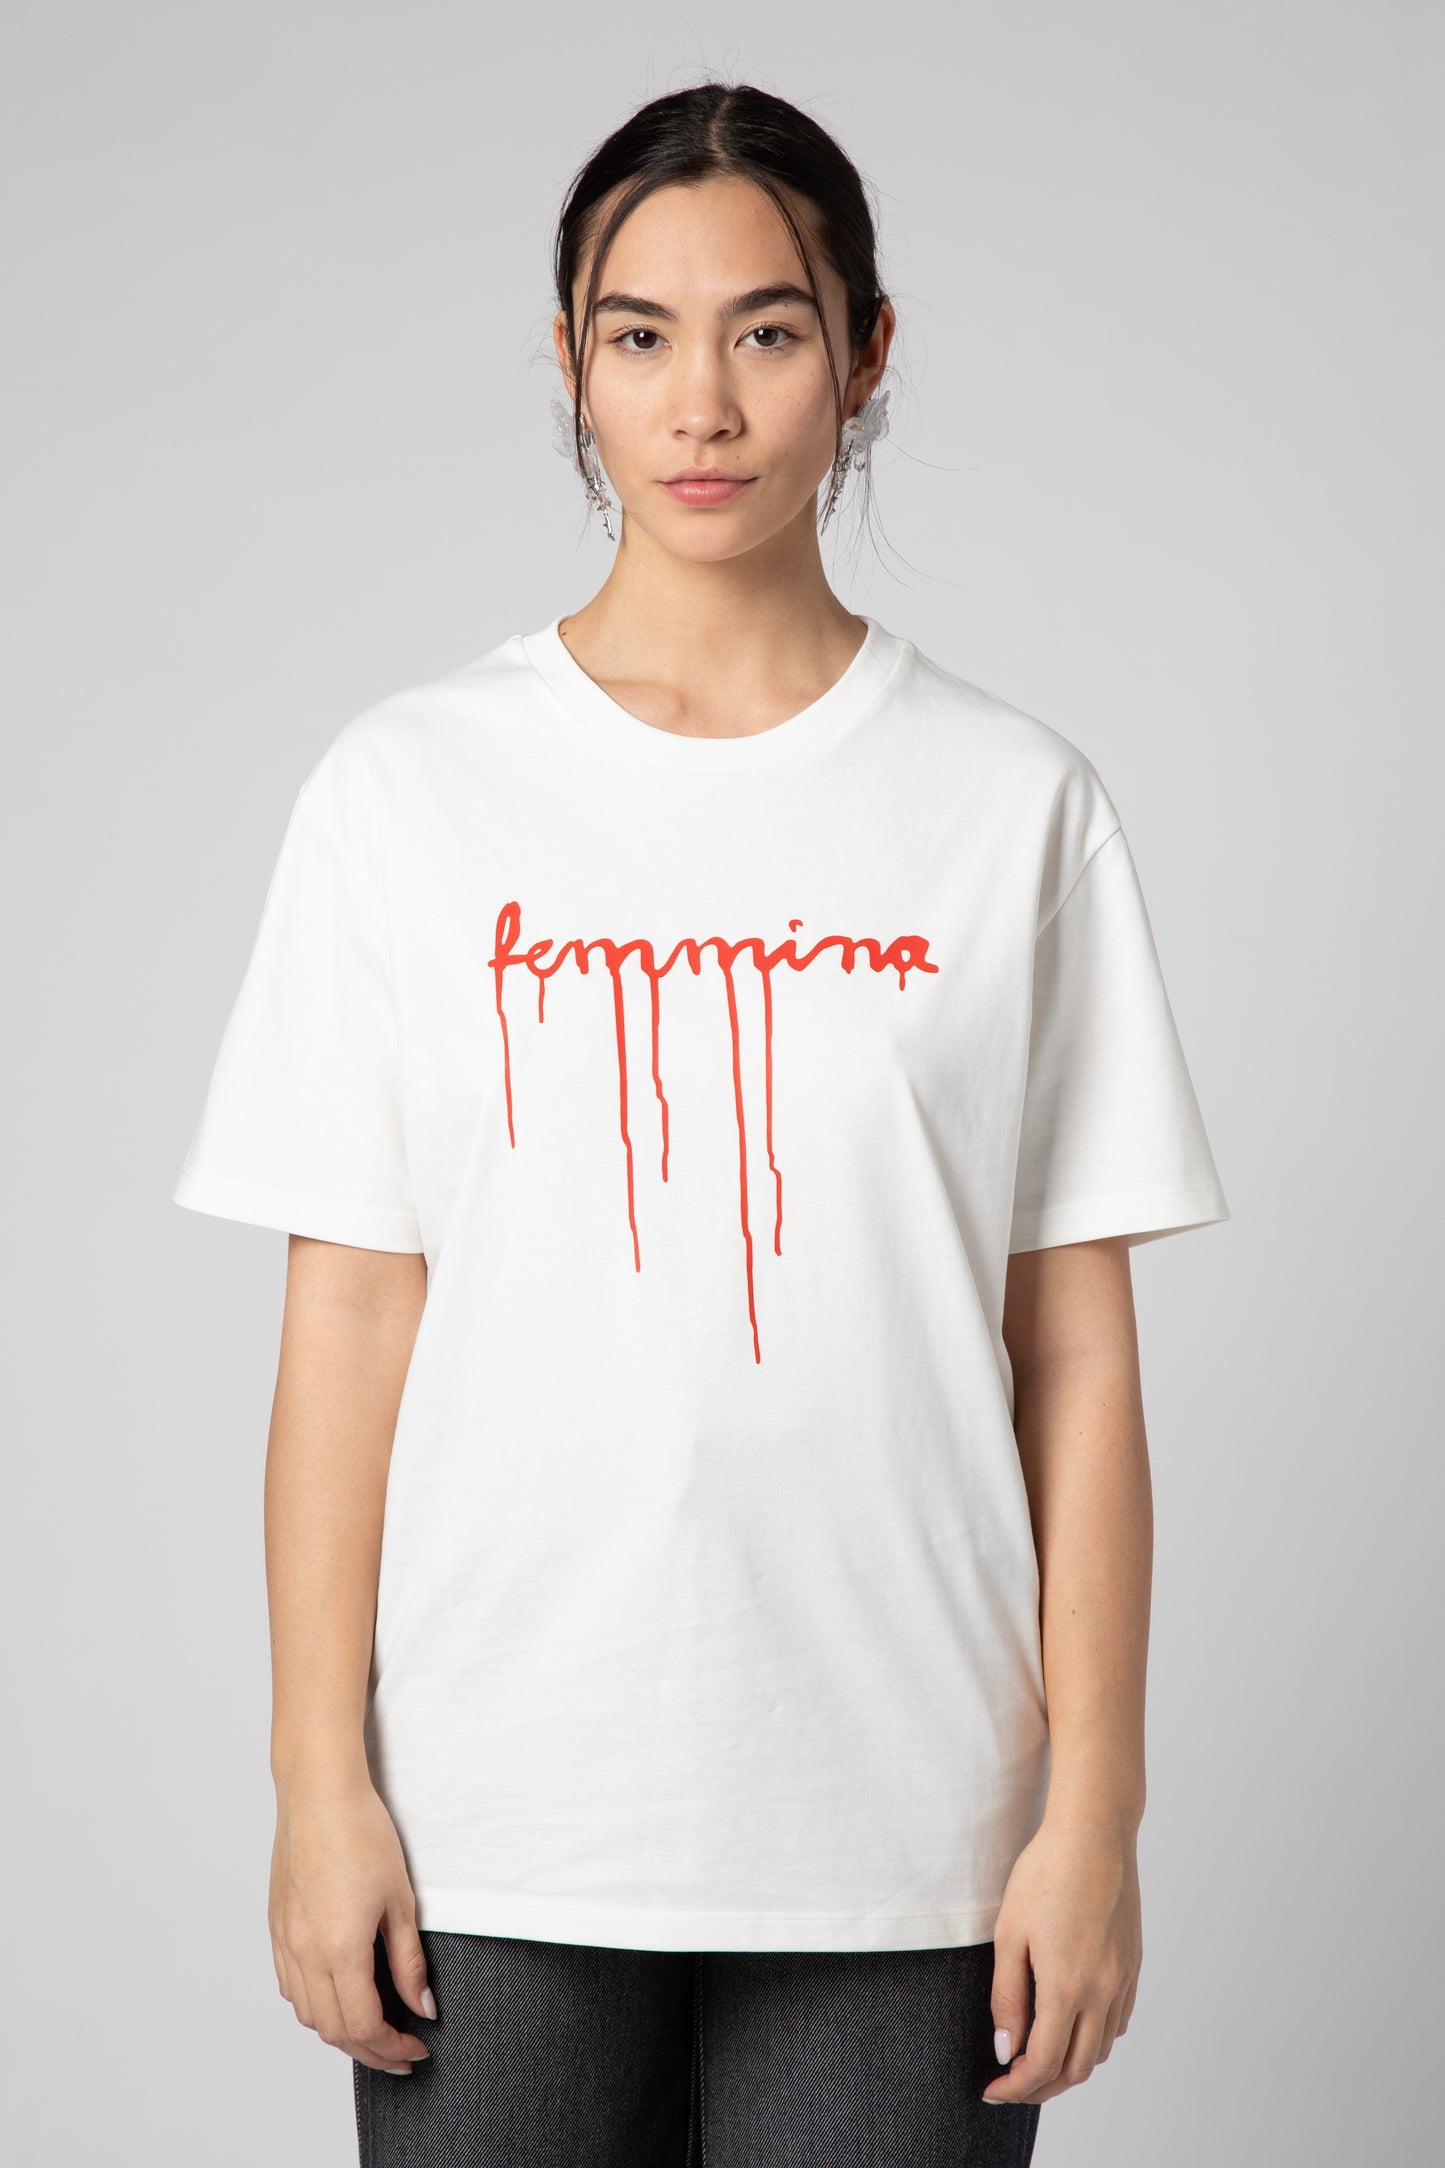 T-shirt "Femmina"